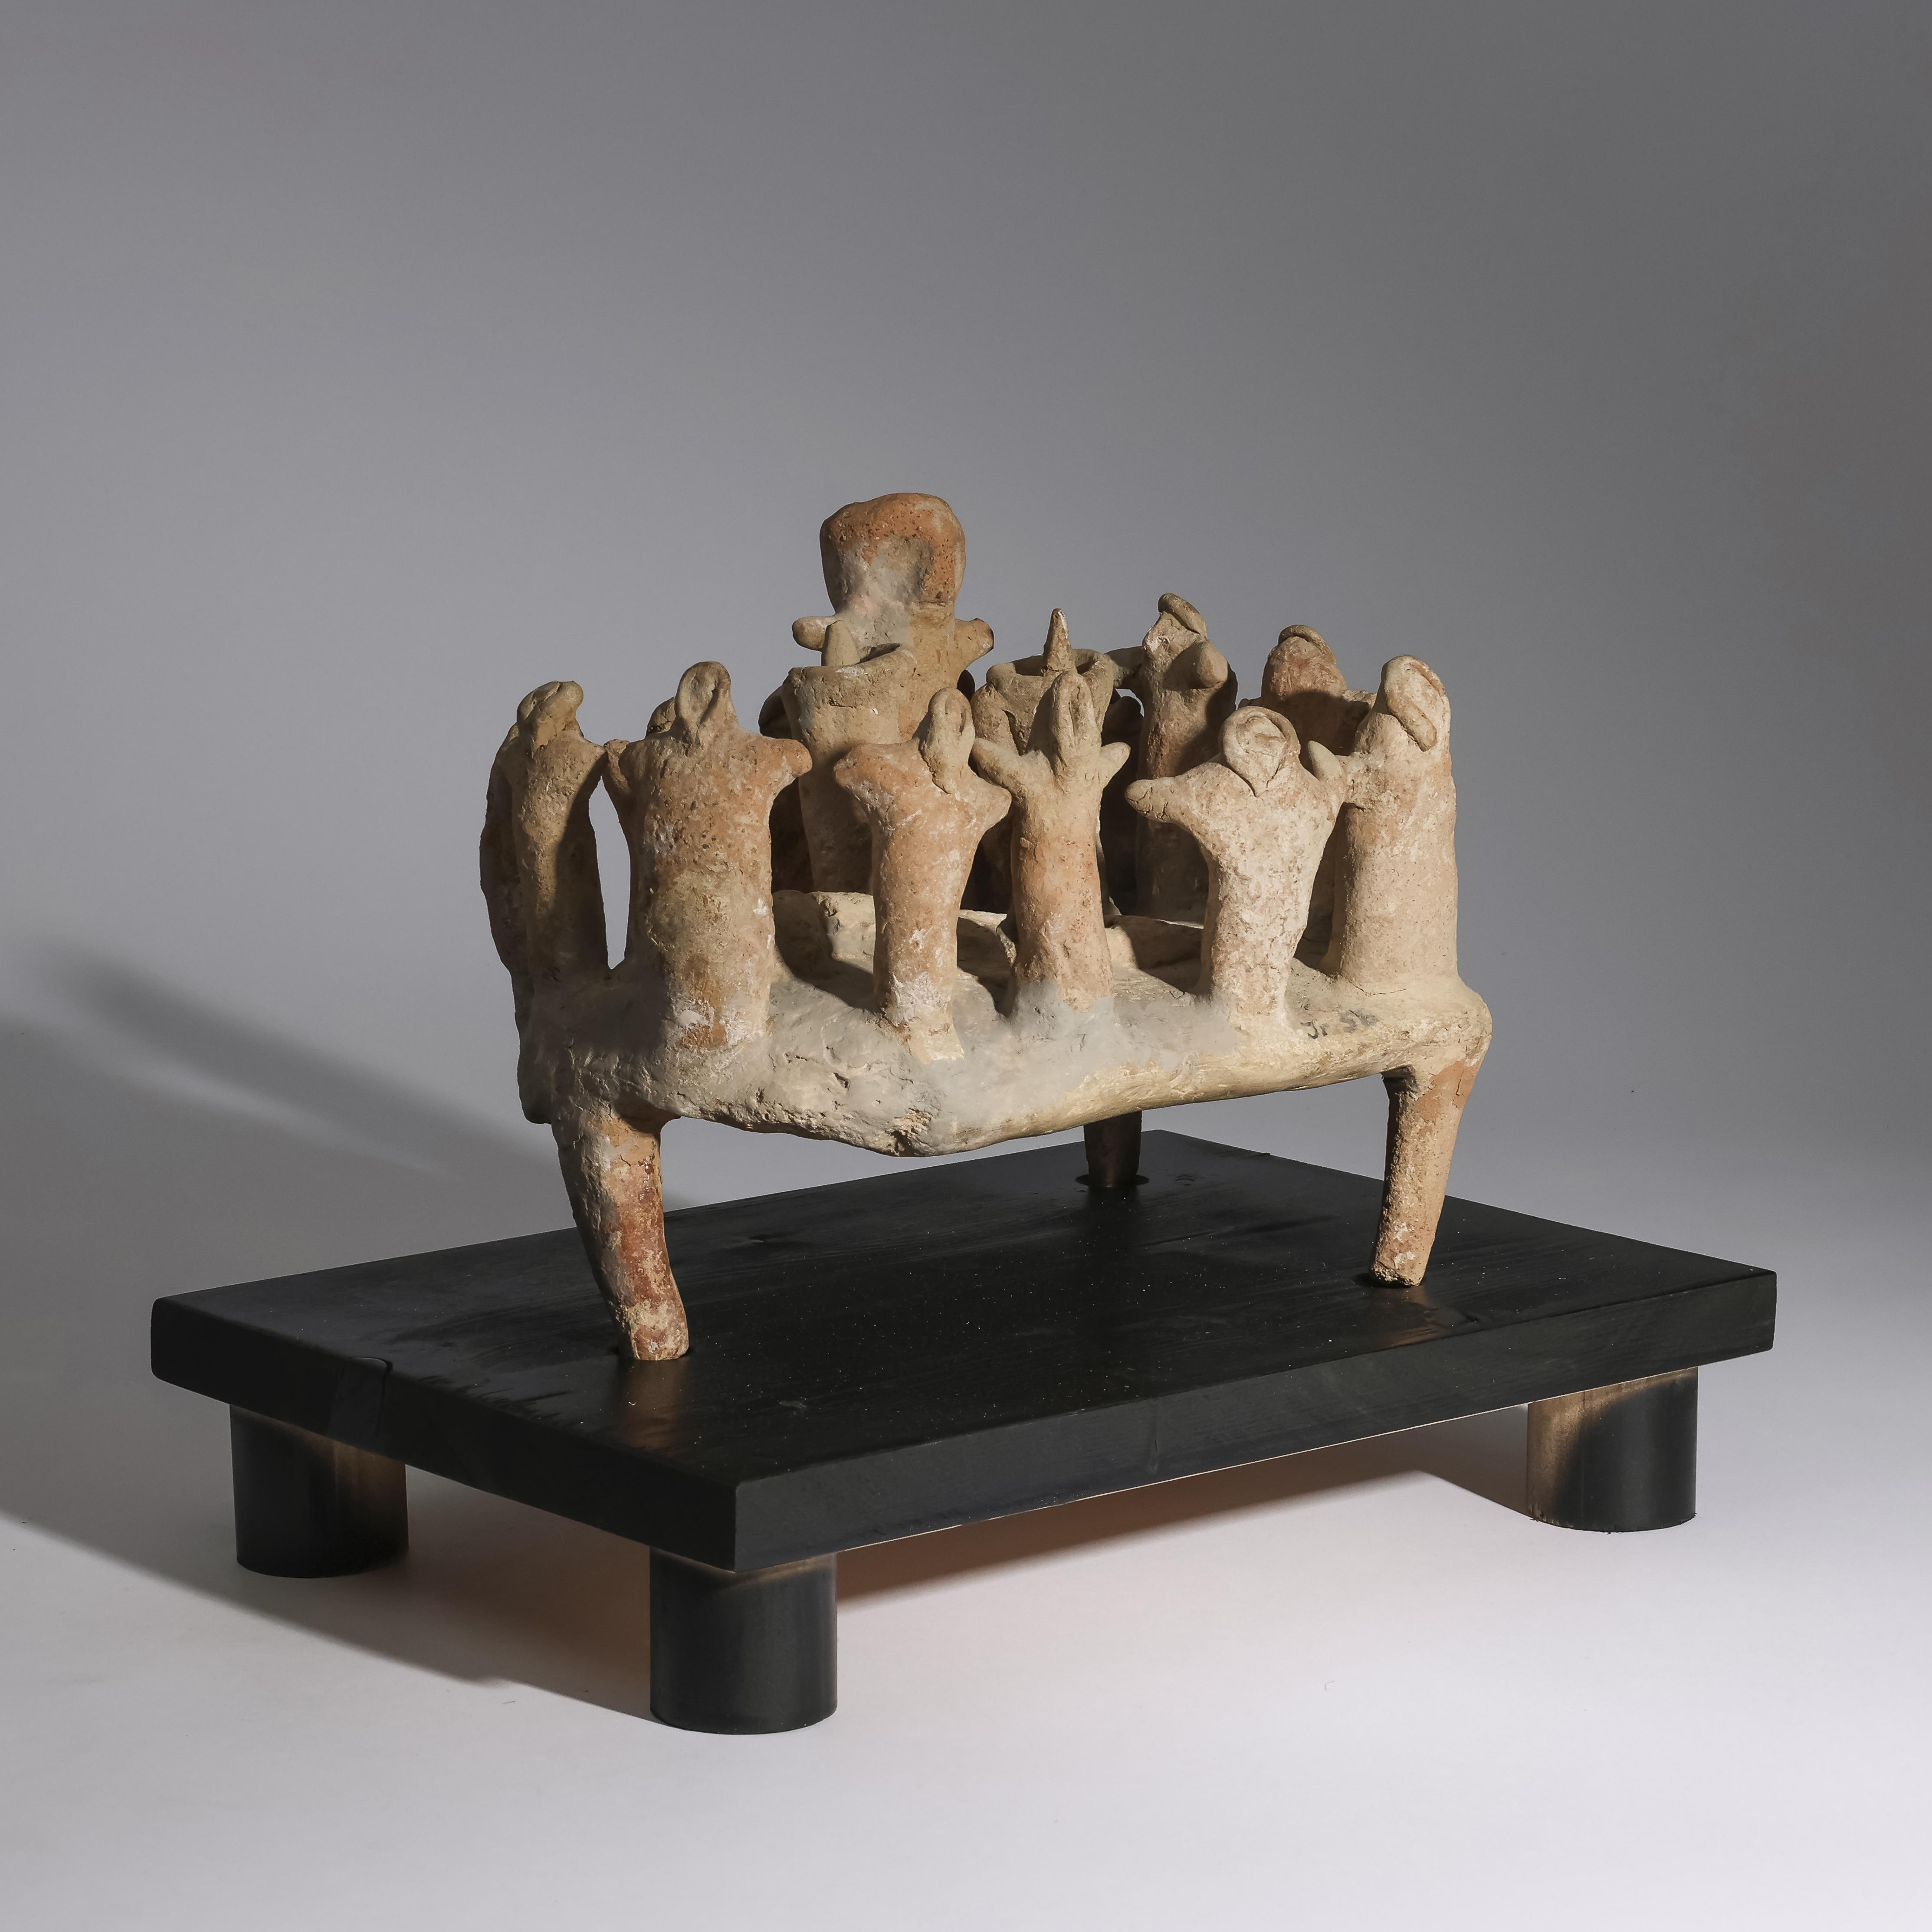 A Persian terracotta funeral votif platform, Kerman, 2nd Mill. BC, - Image 6 of 7